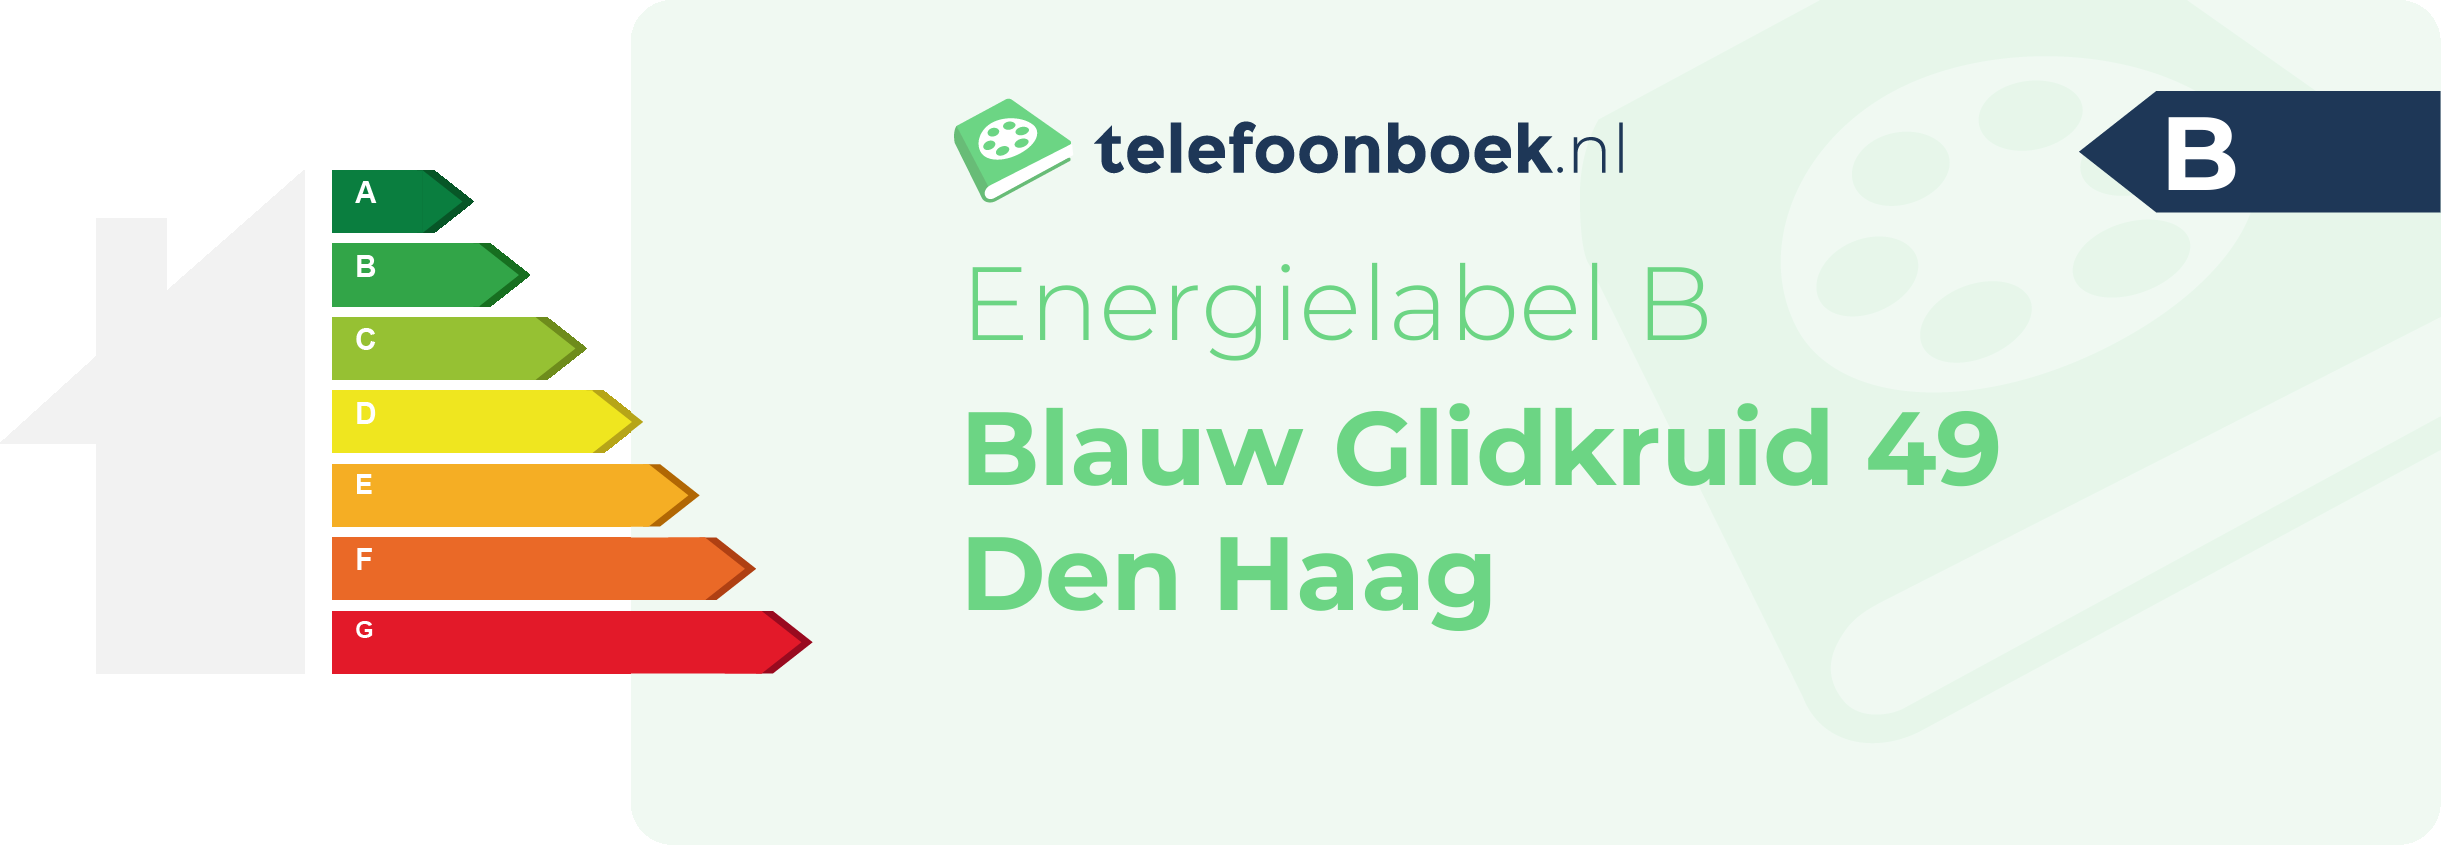 Energielabel Blauw Glidkruid 49 Den Haag